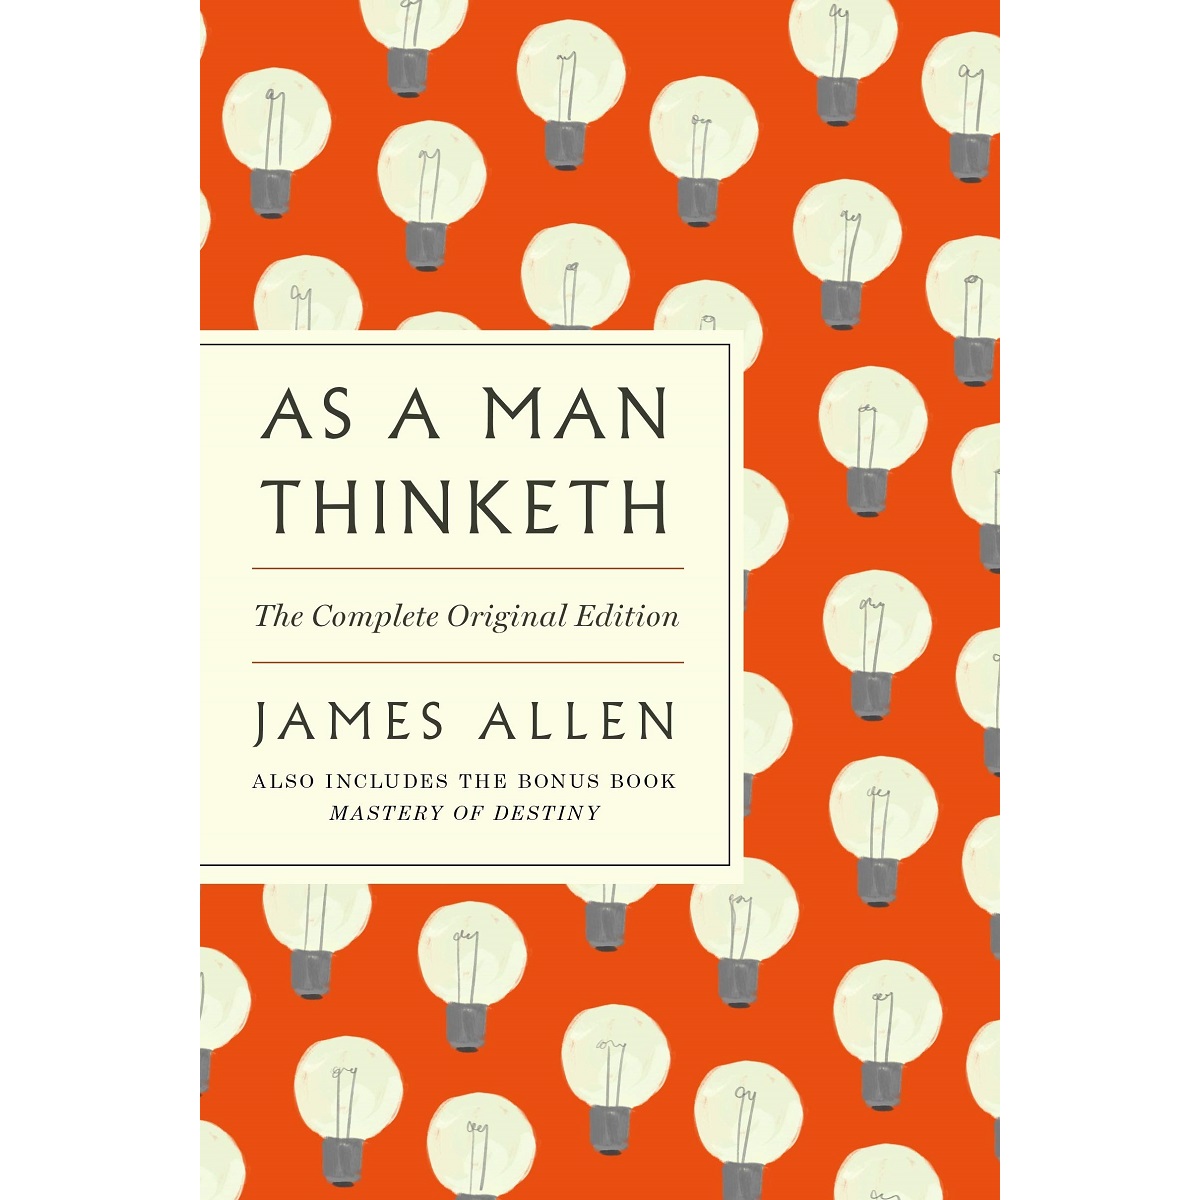 As a Man Thinketh By James Allen